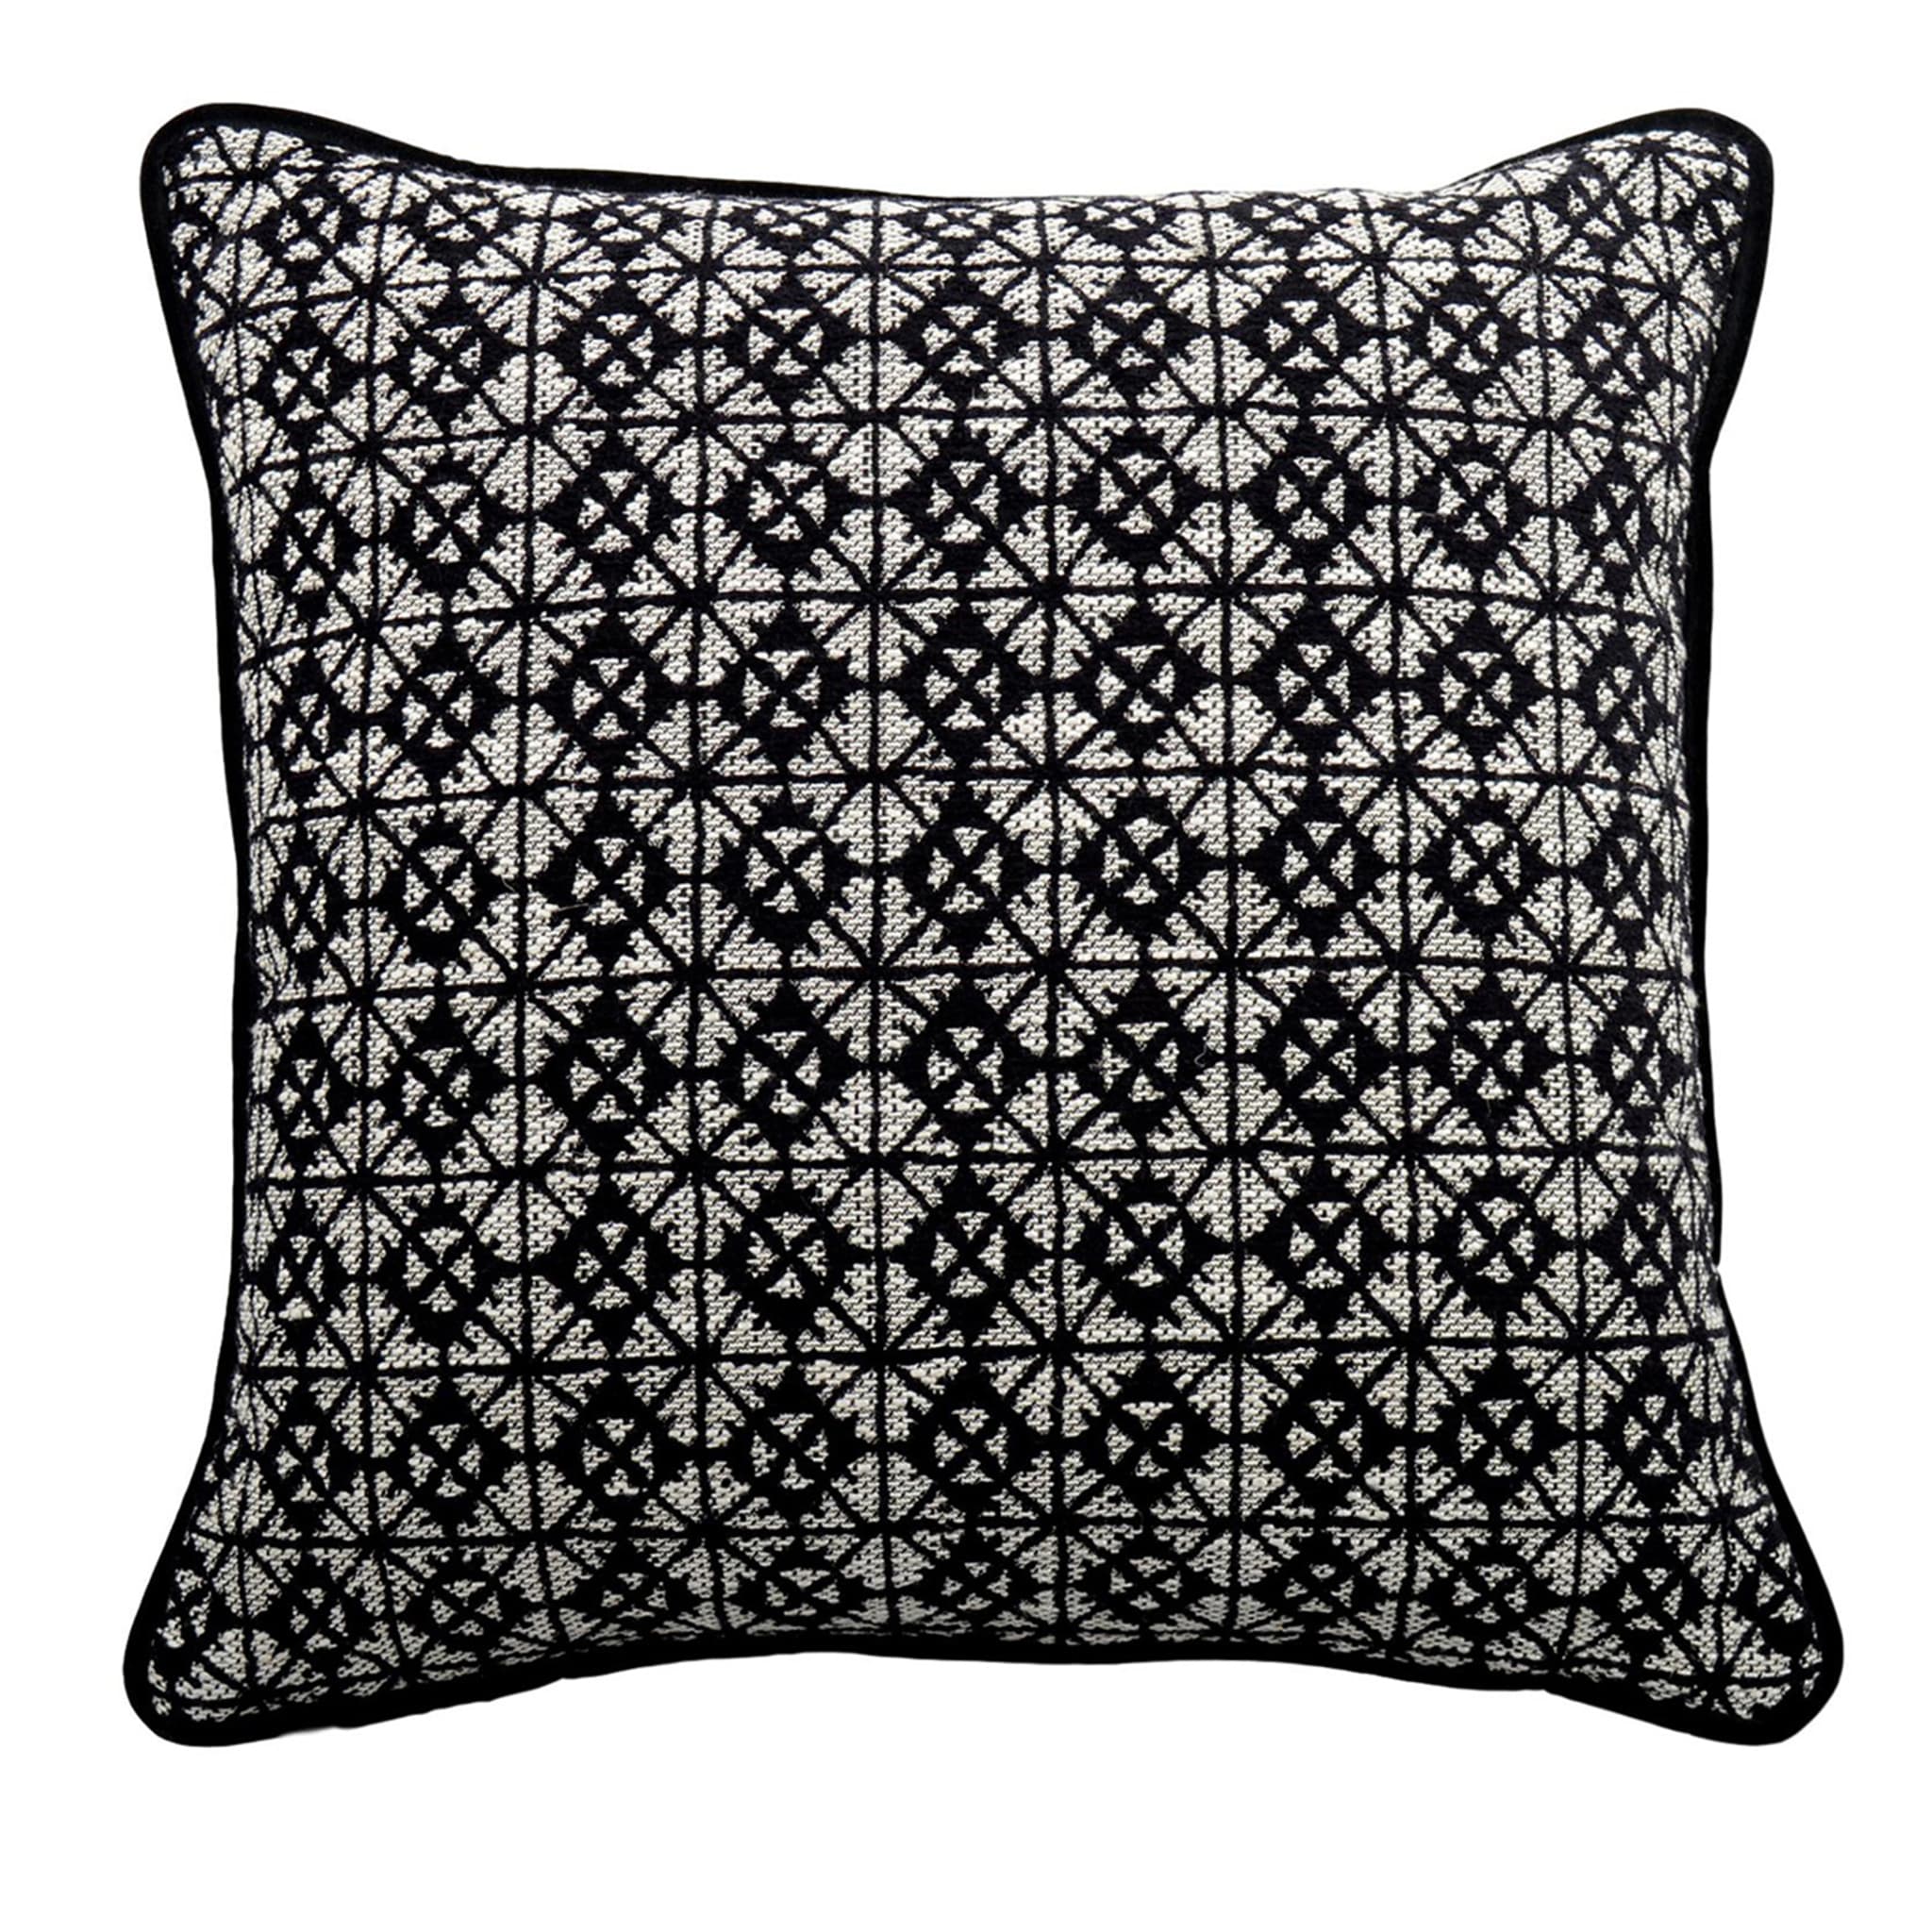 Black and White Carrè Cushion in geometric jacquard fabric - Main view